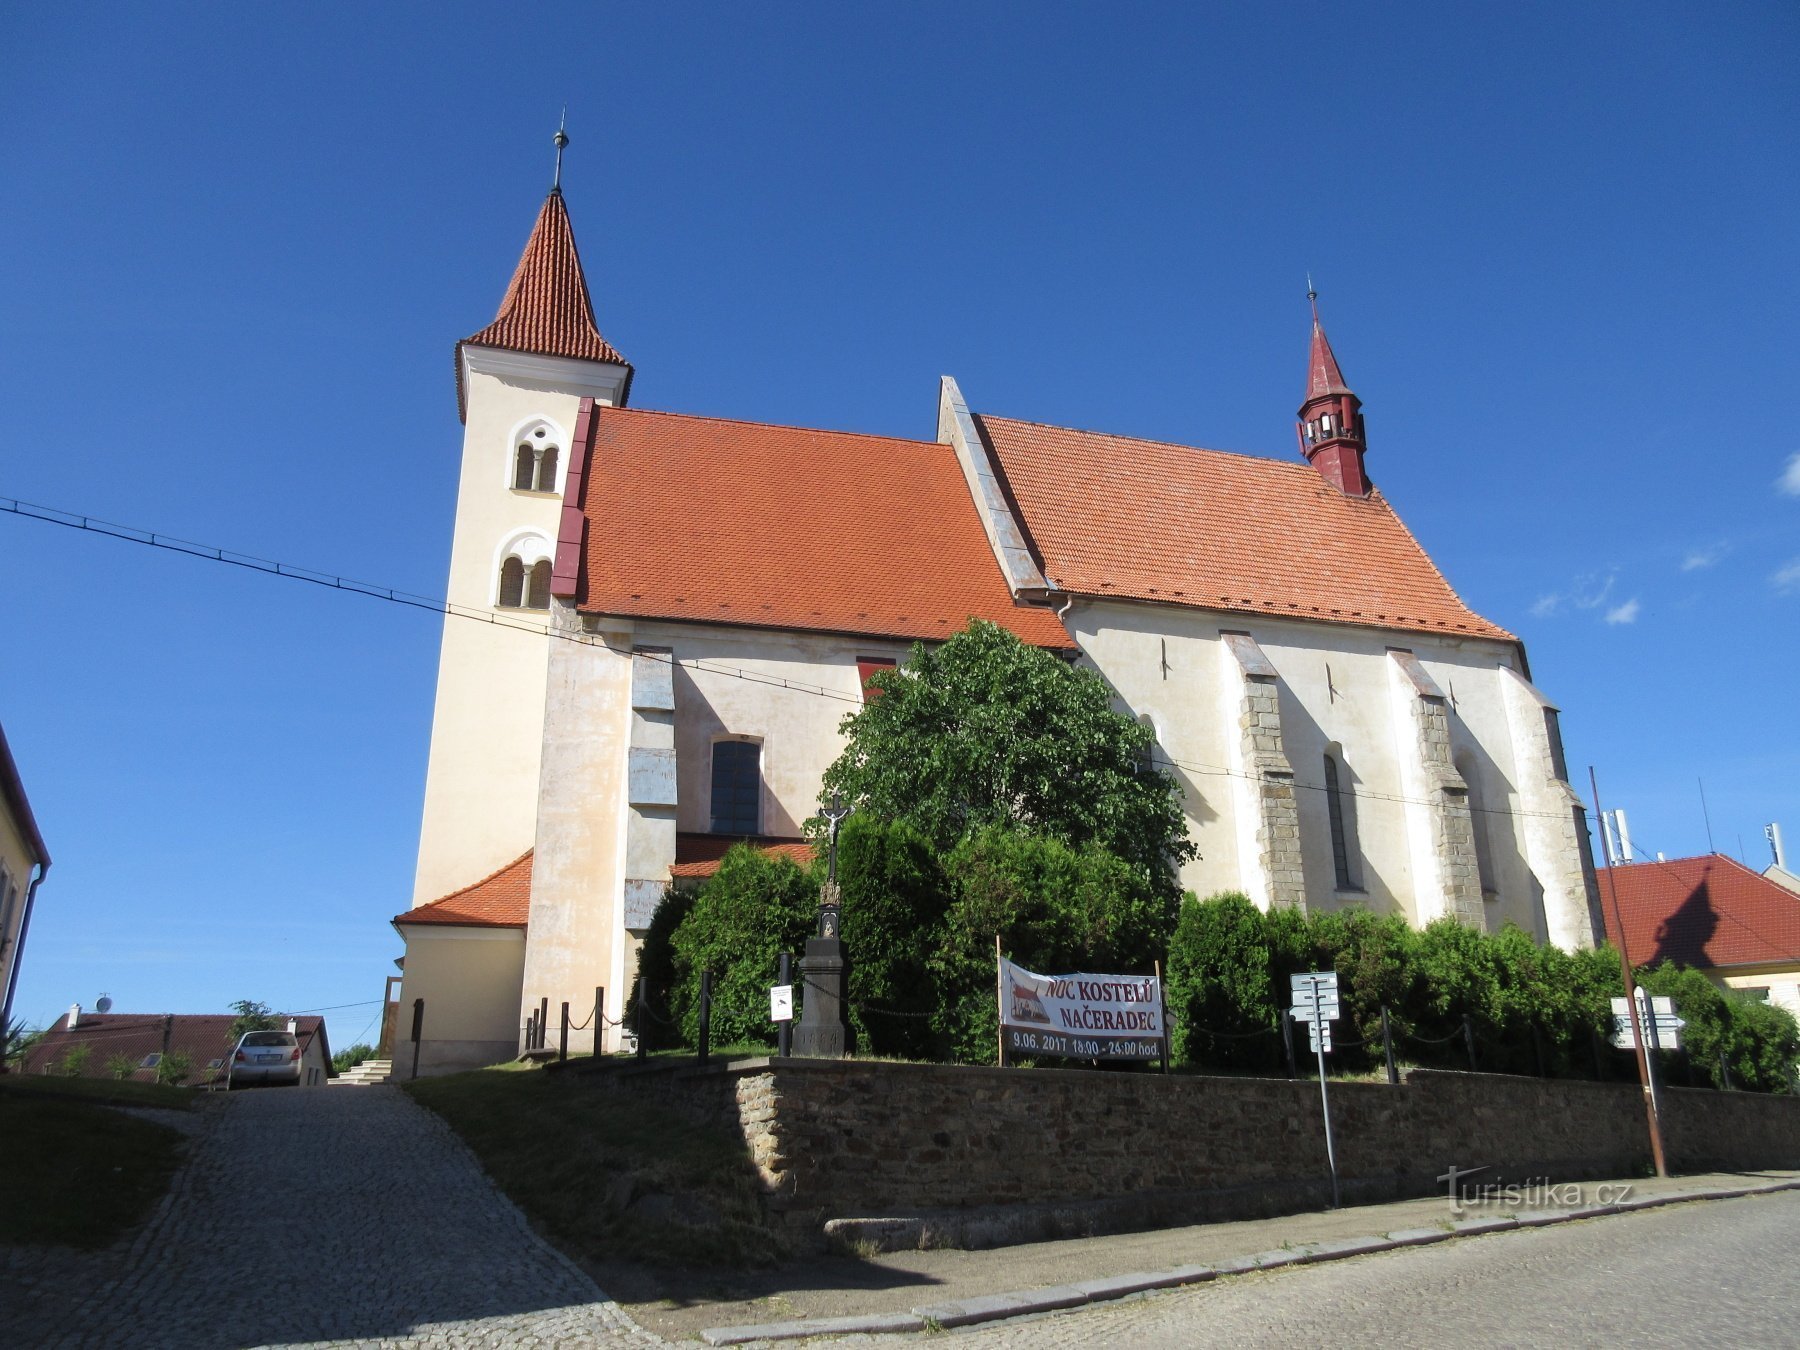 Načeradec – Kirche und Festung